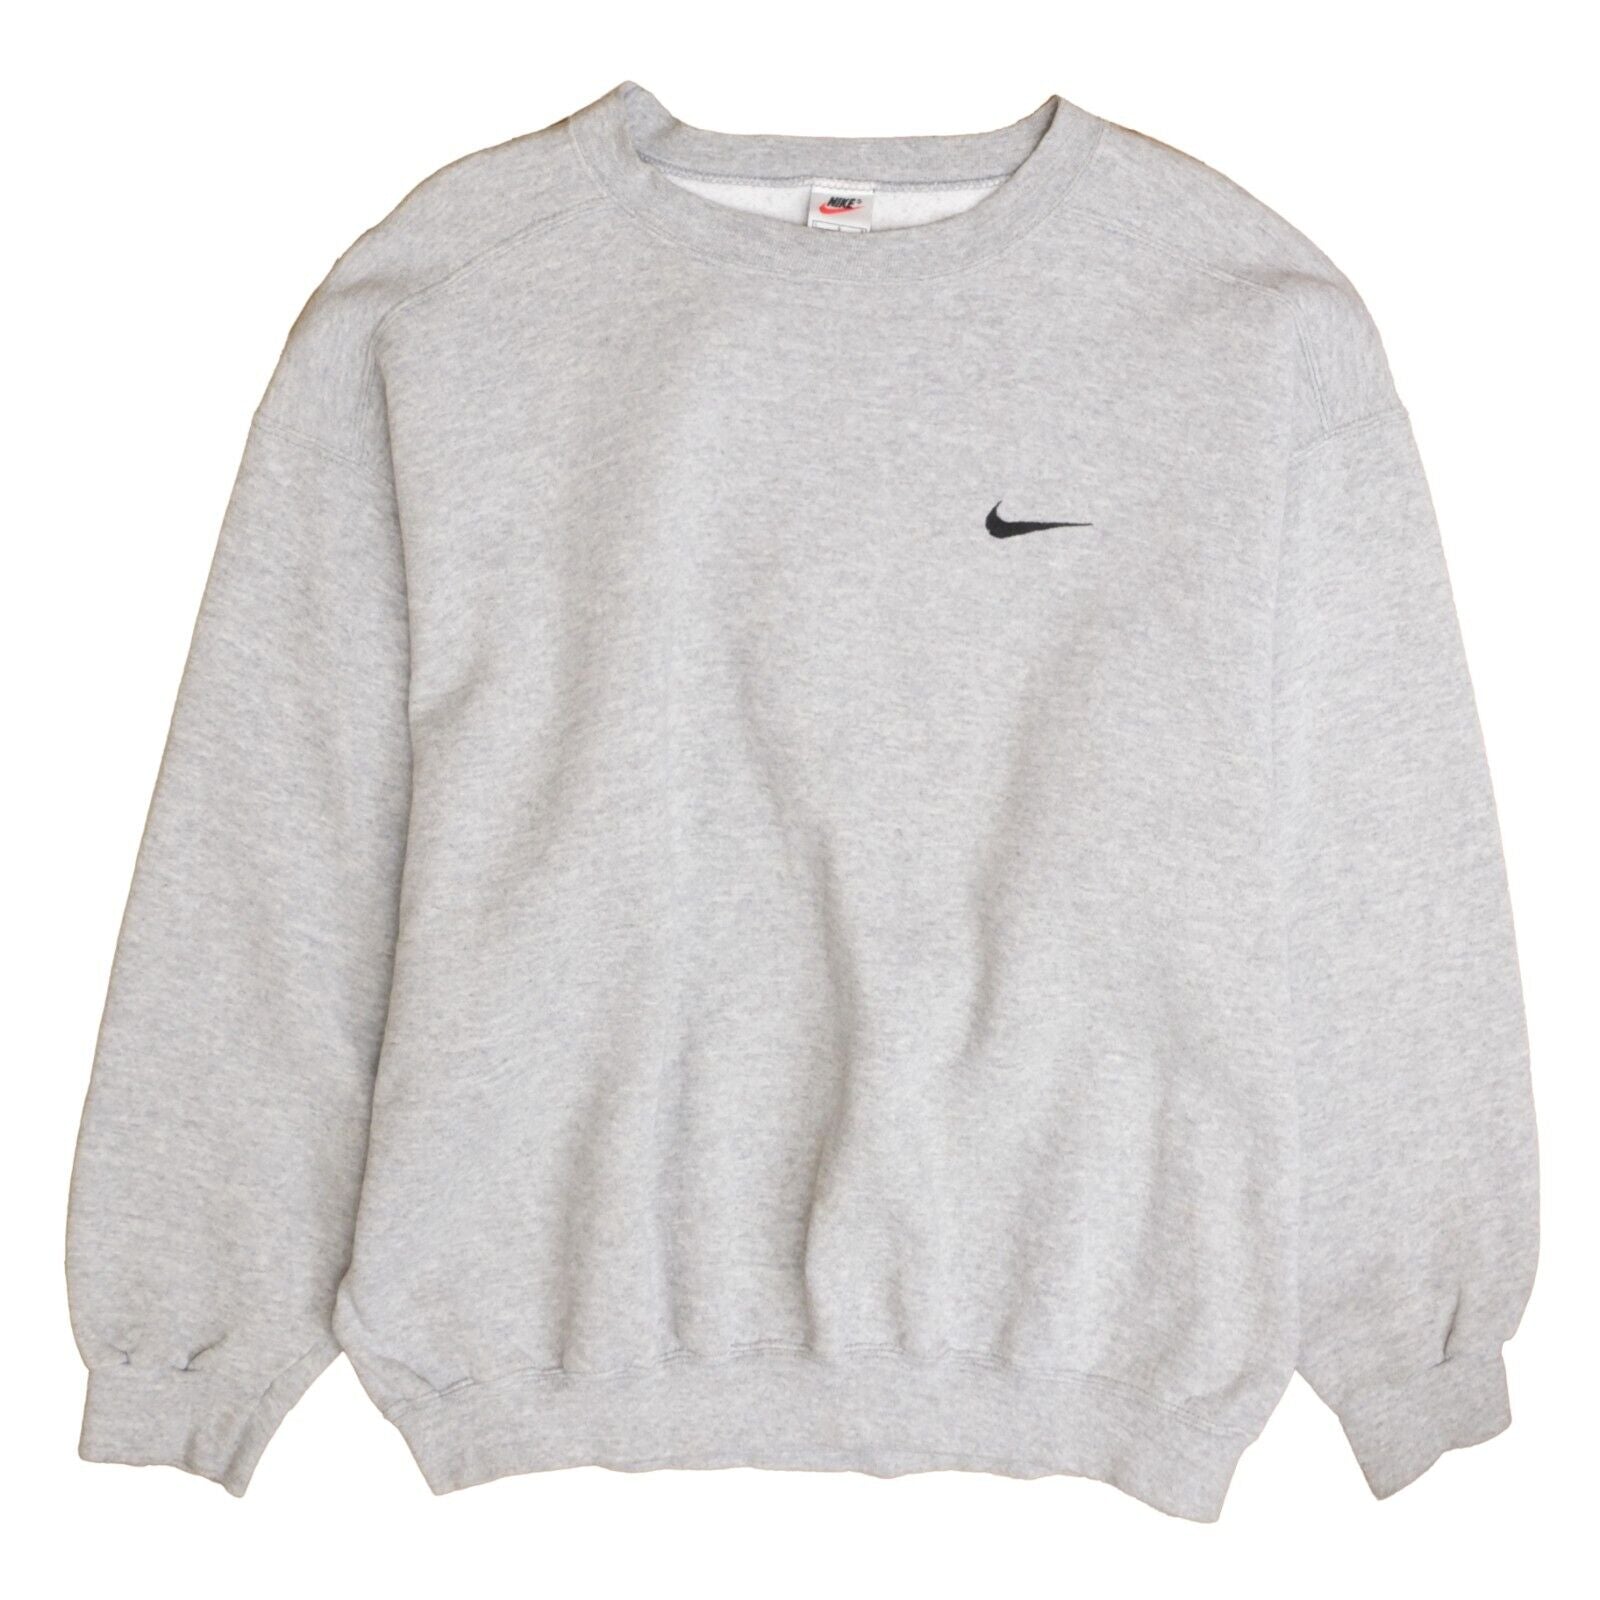 Vintage Nike Sweatshirt Crewneck Size Large Gray Embroidered Swoosh 90s